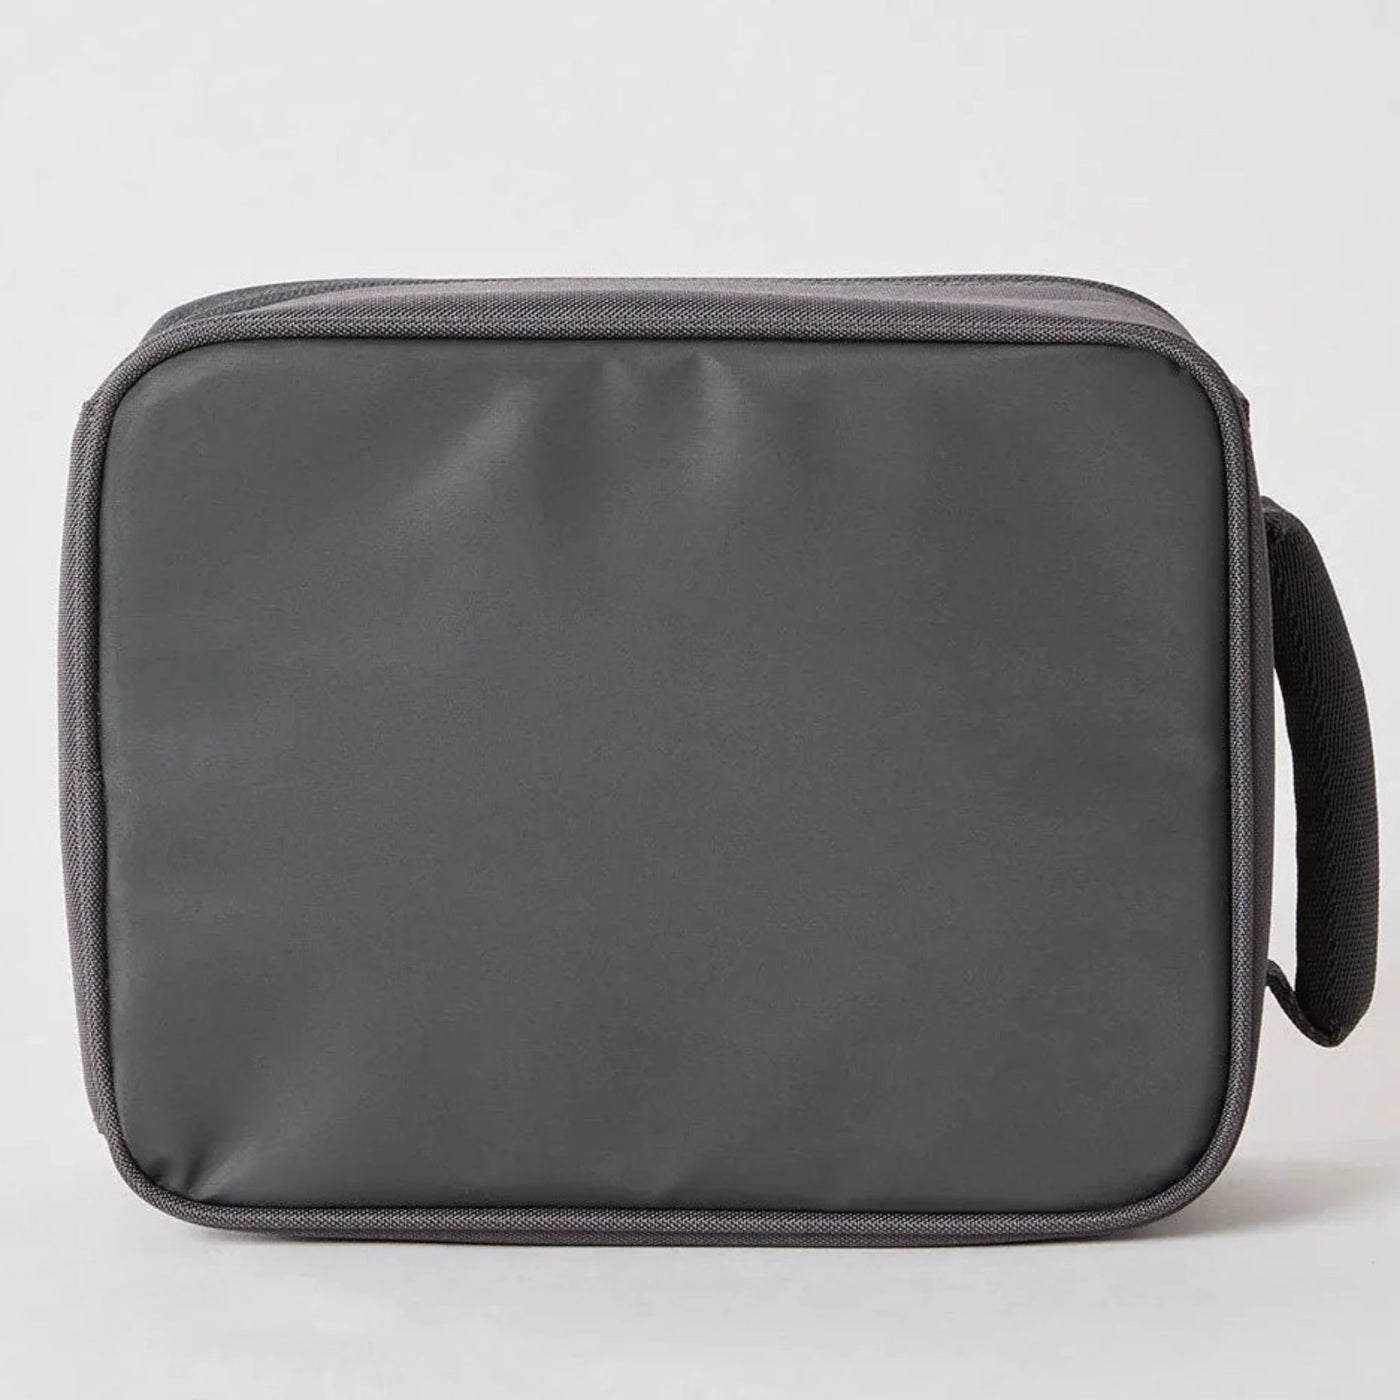 Rip Curl Lunch Bag - Black/Multi